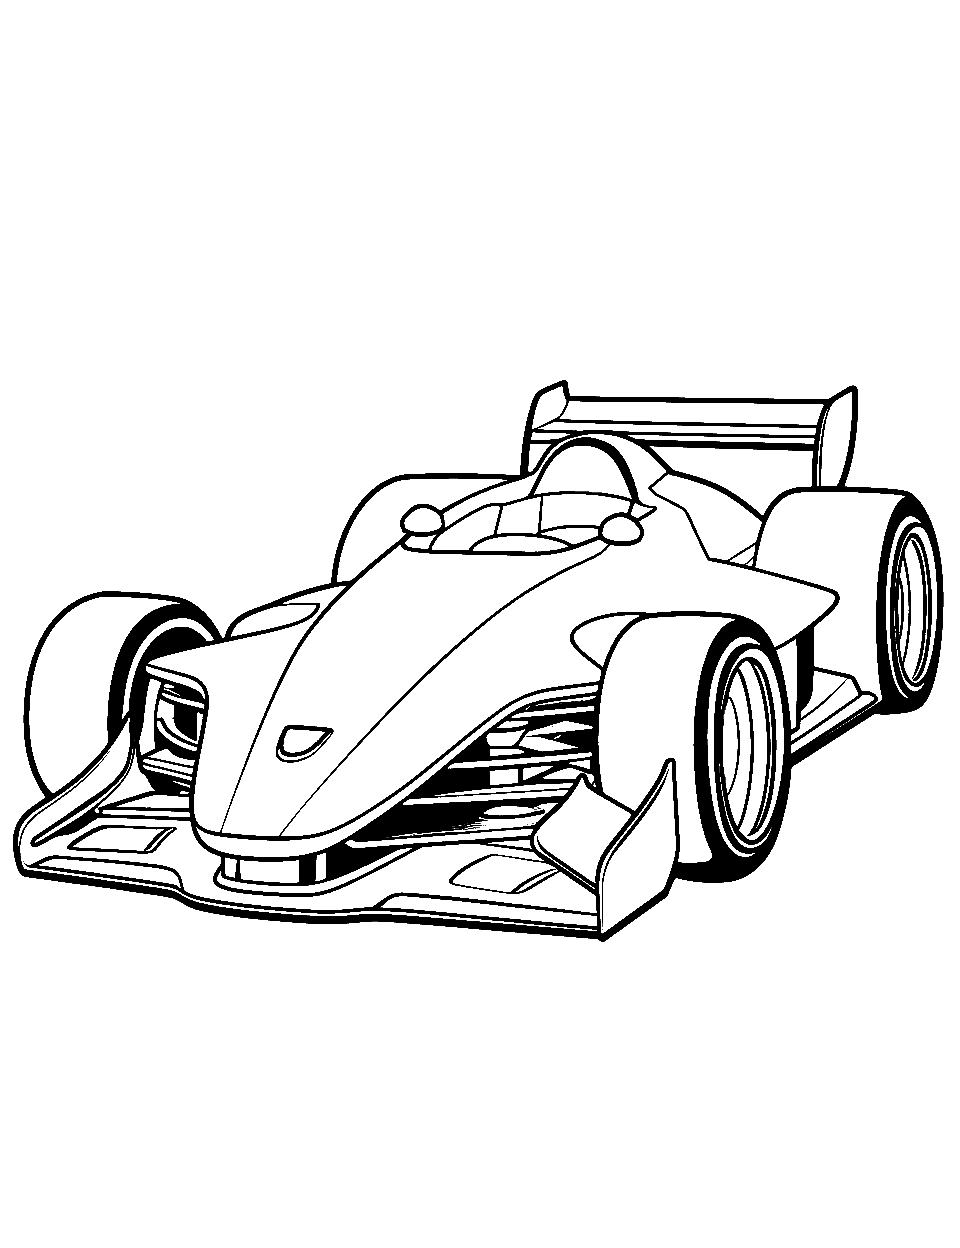 Fun Formula Car Race Coloring Page - A whimsical, cartoon-style Formula race car.